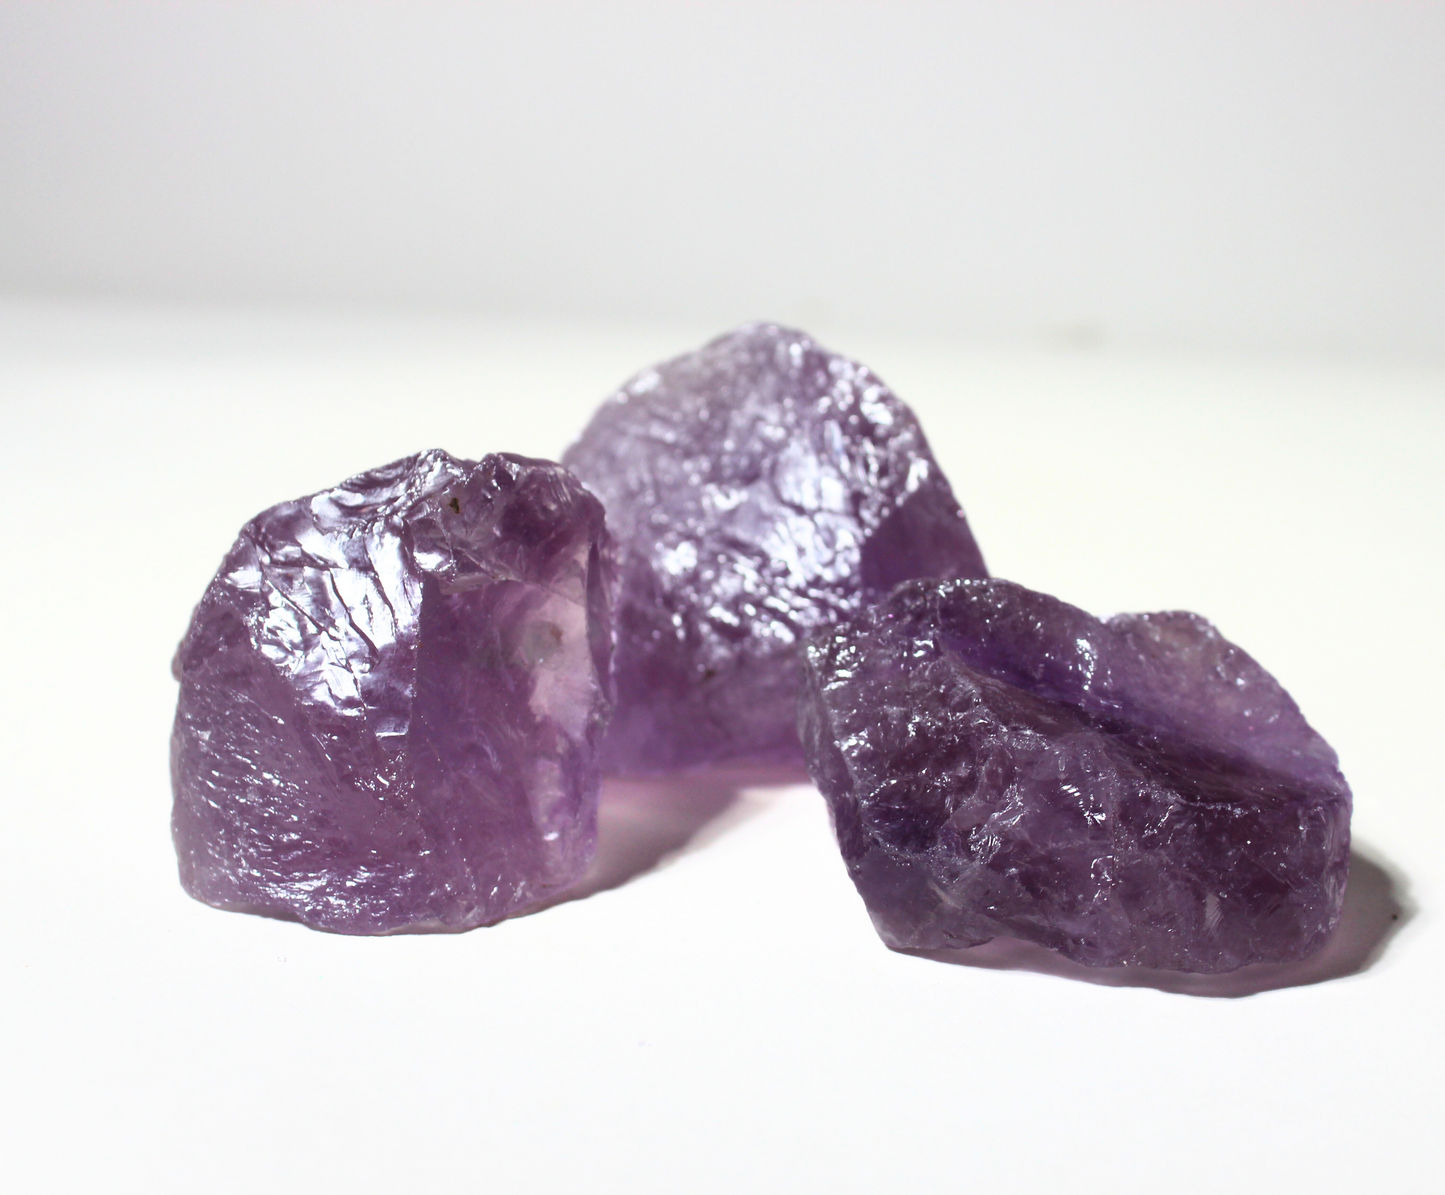 Amethyst | "A" Grade Tumbling Rough Rocks from Brazil | 2" - 3" Raw Crystals